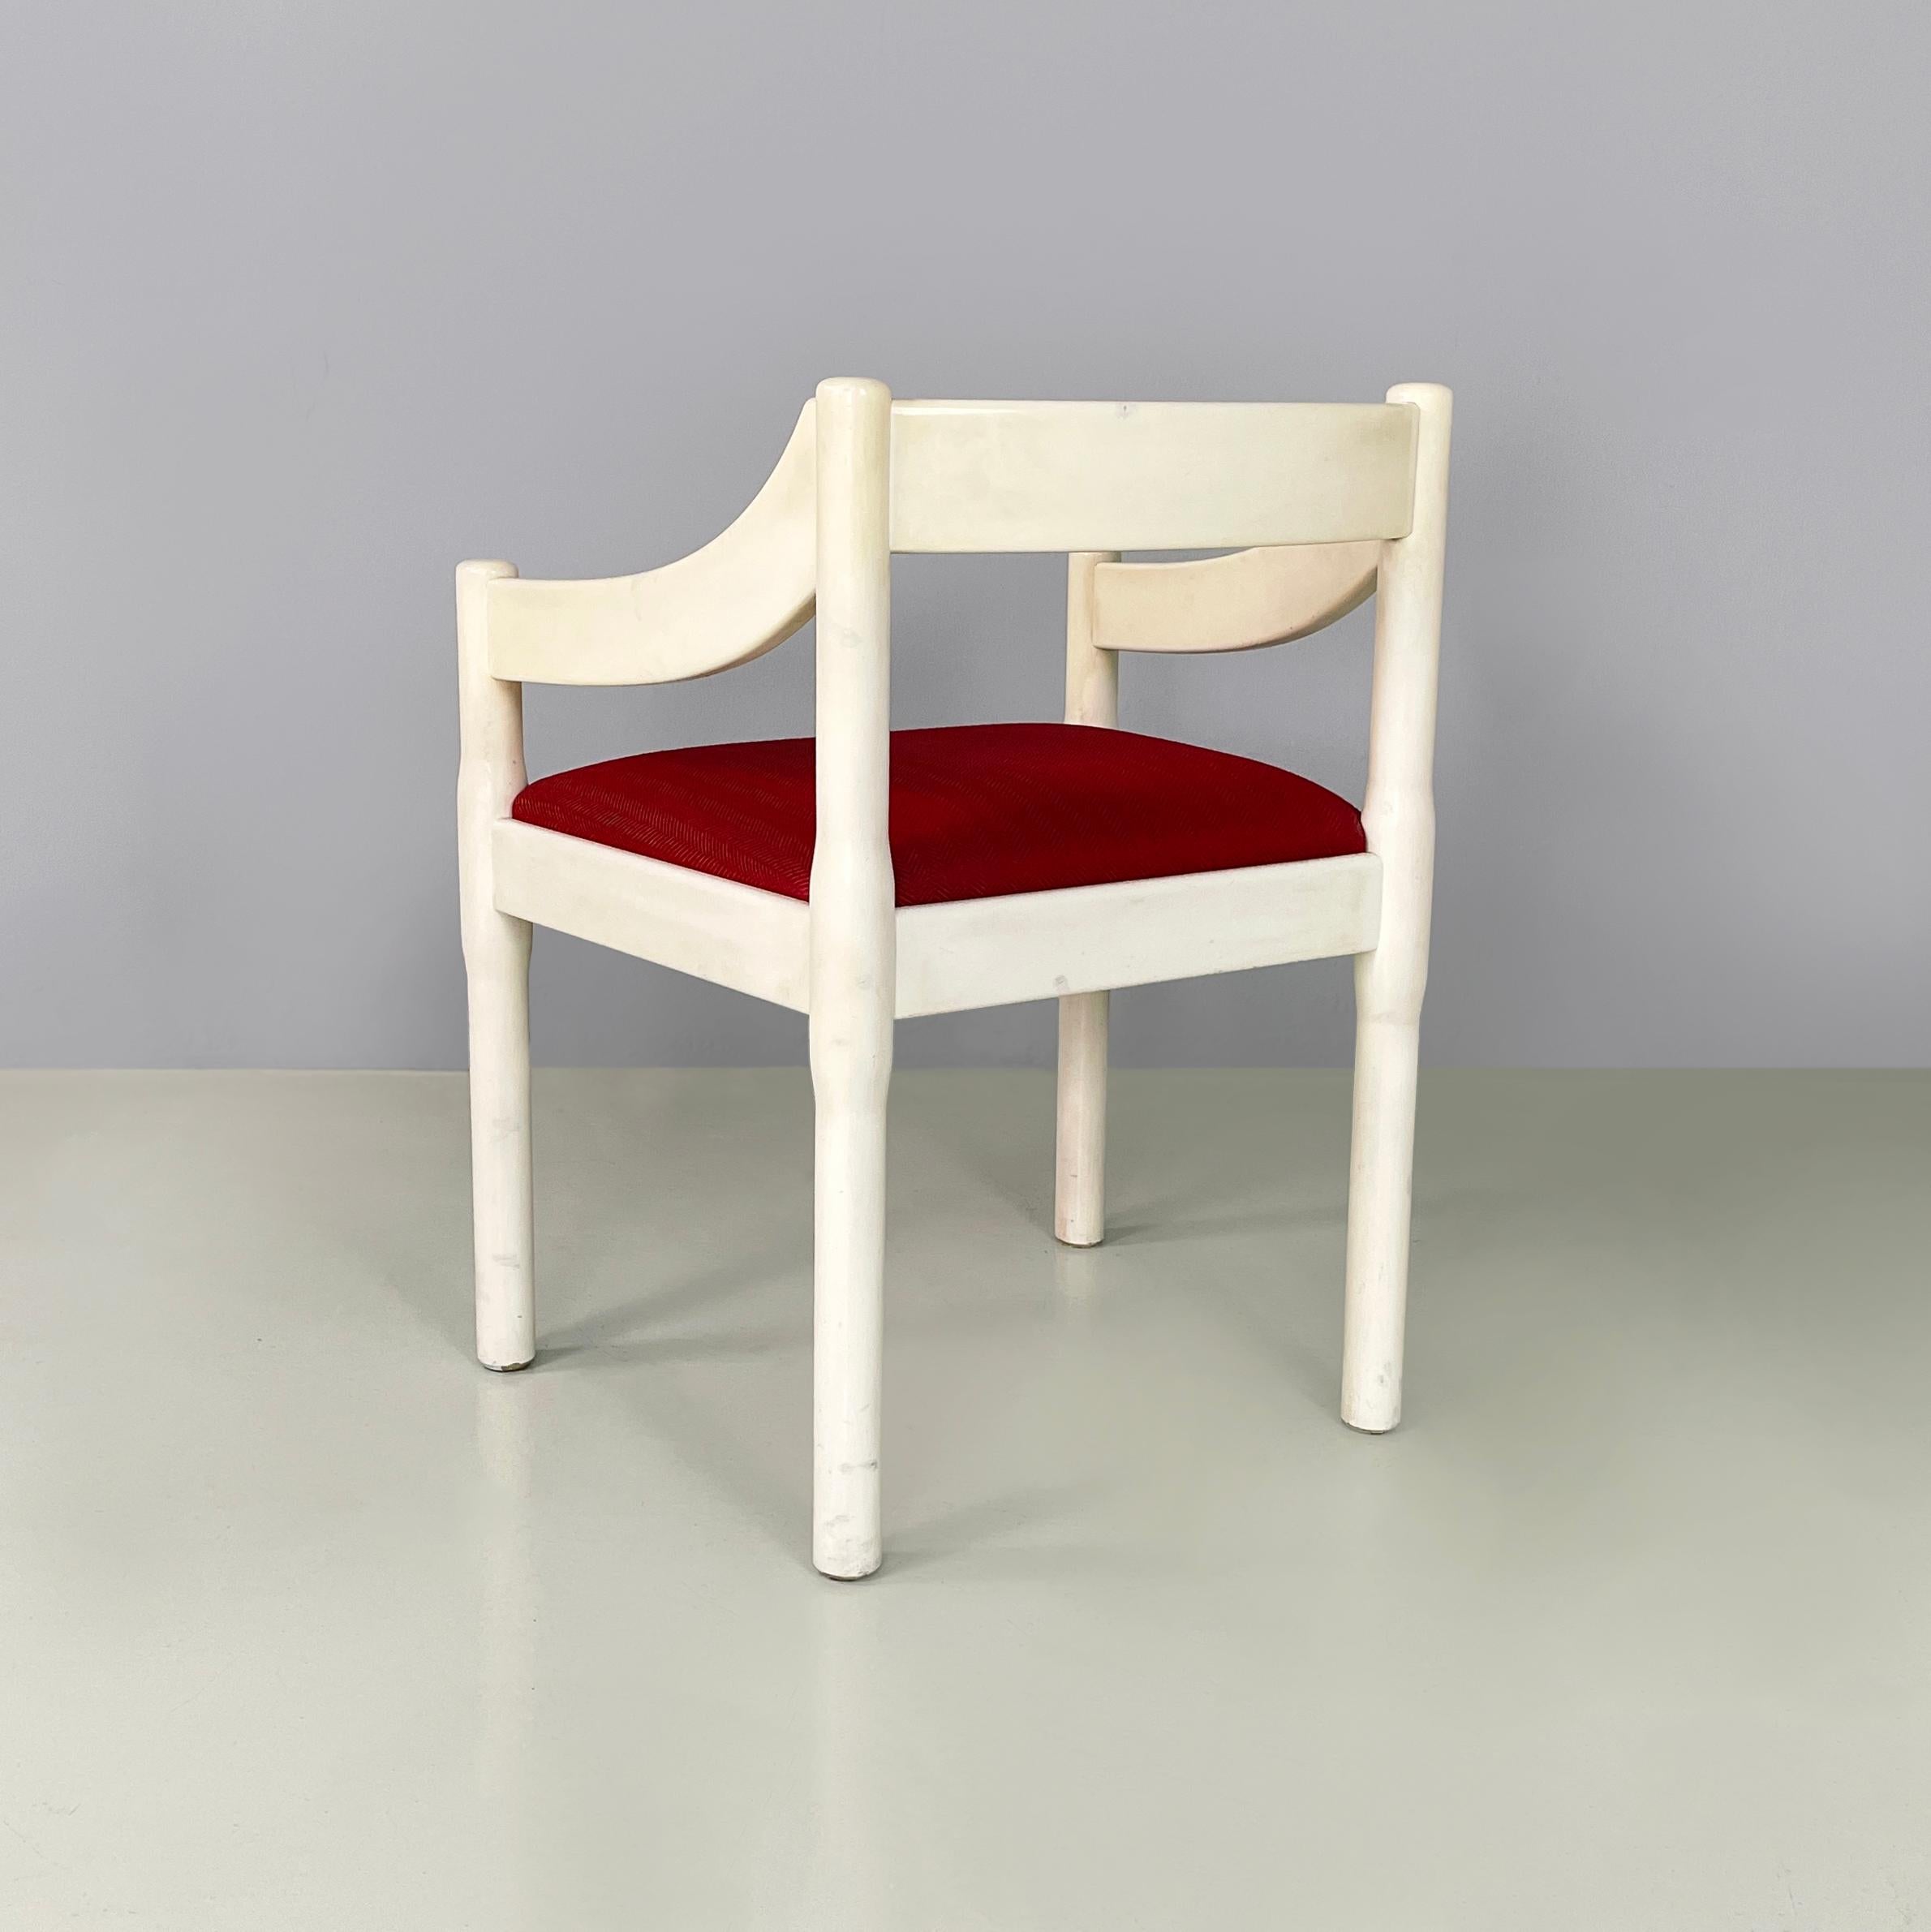 Italian mid-century modern Chair Carimate by Vico Magistretti for Cassina, 1970s In Fair Condition For Sale In MIlano, IT